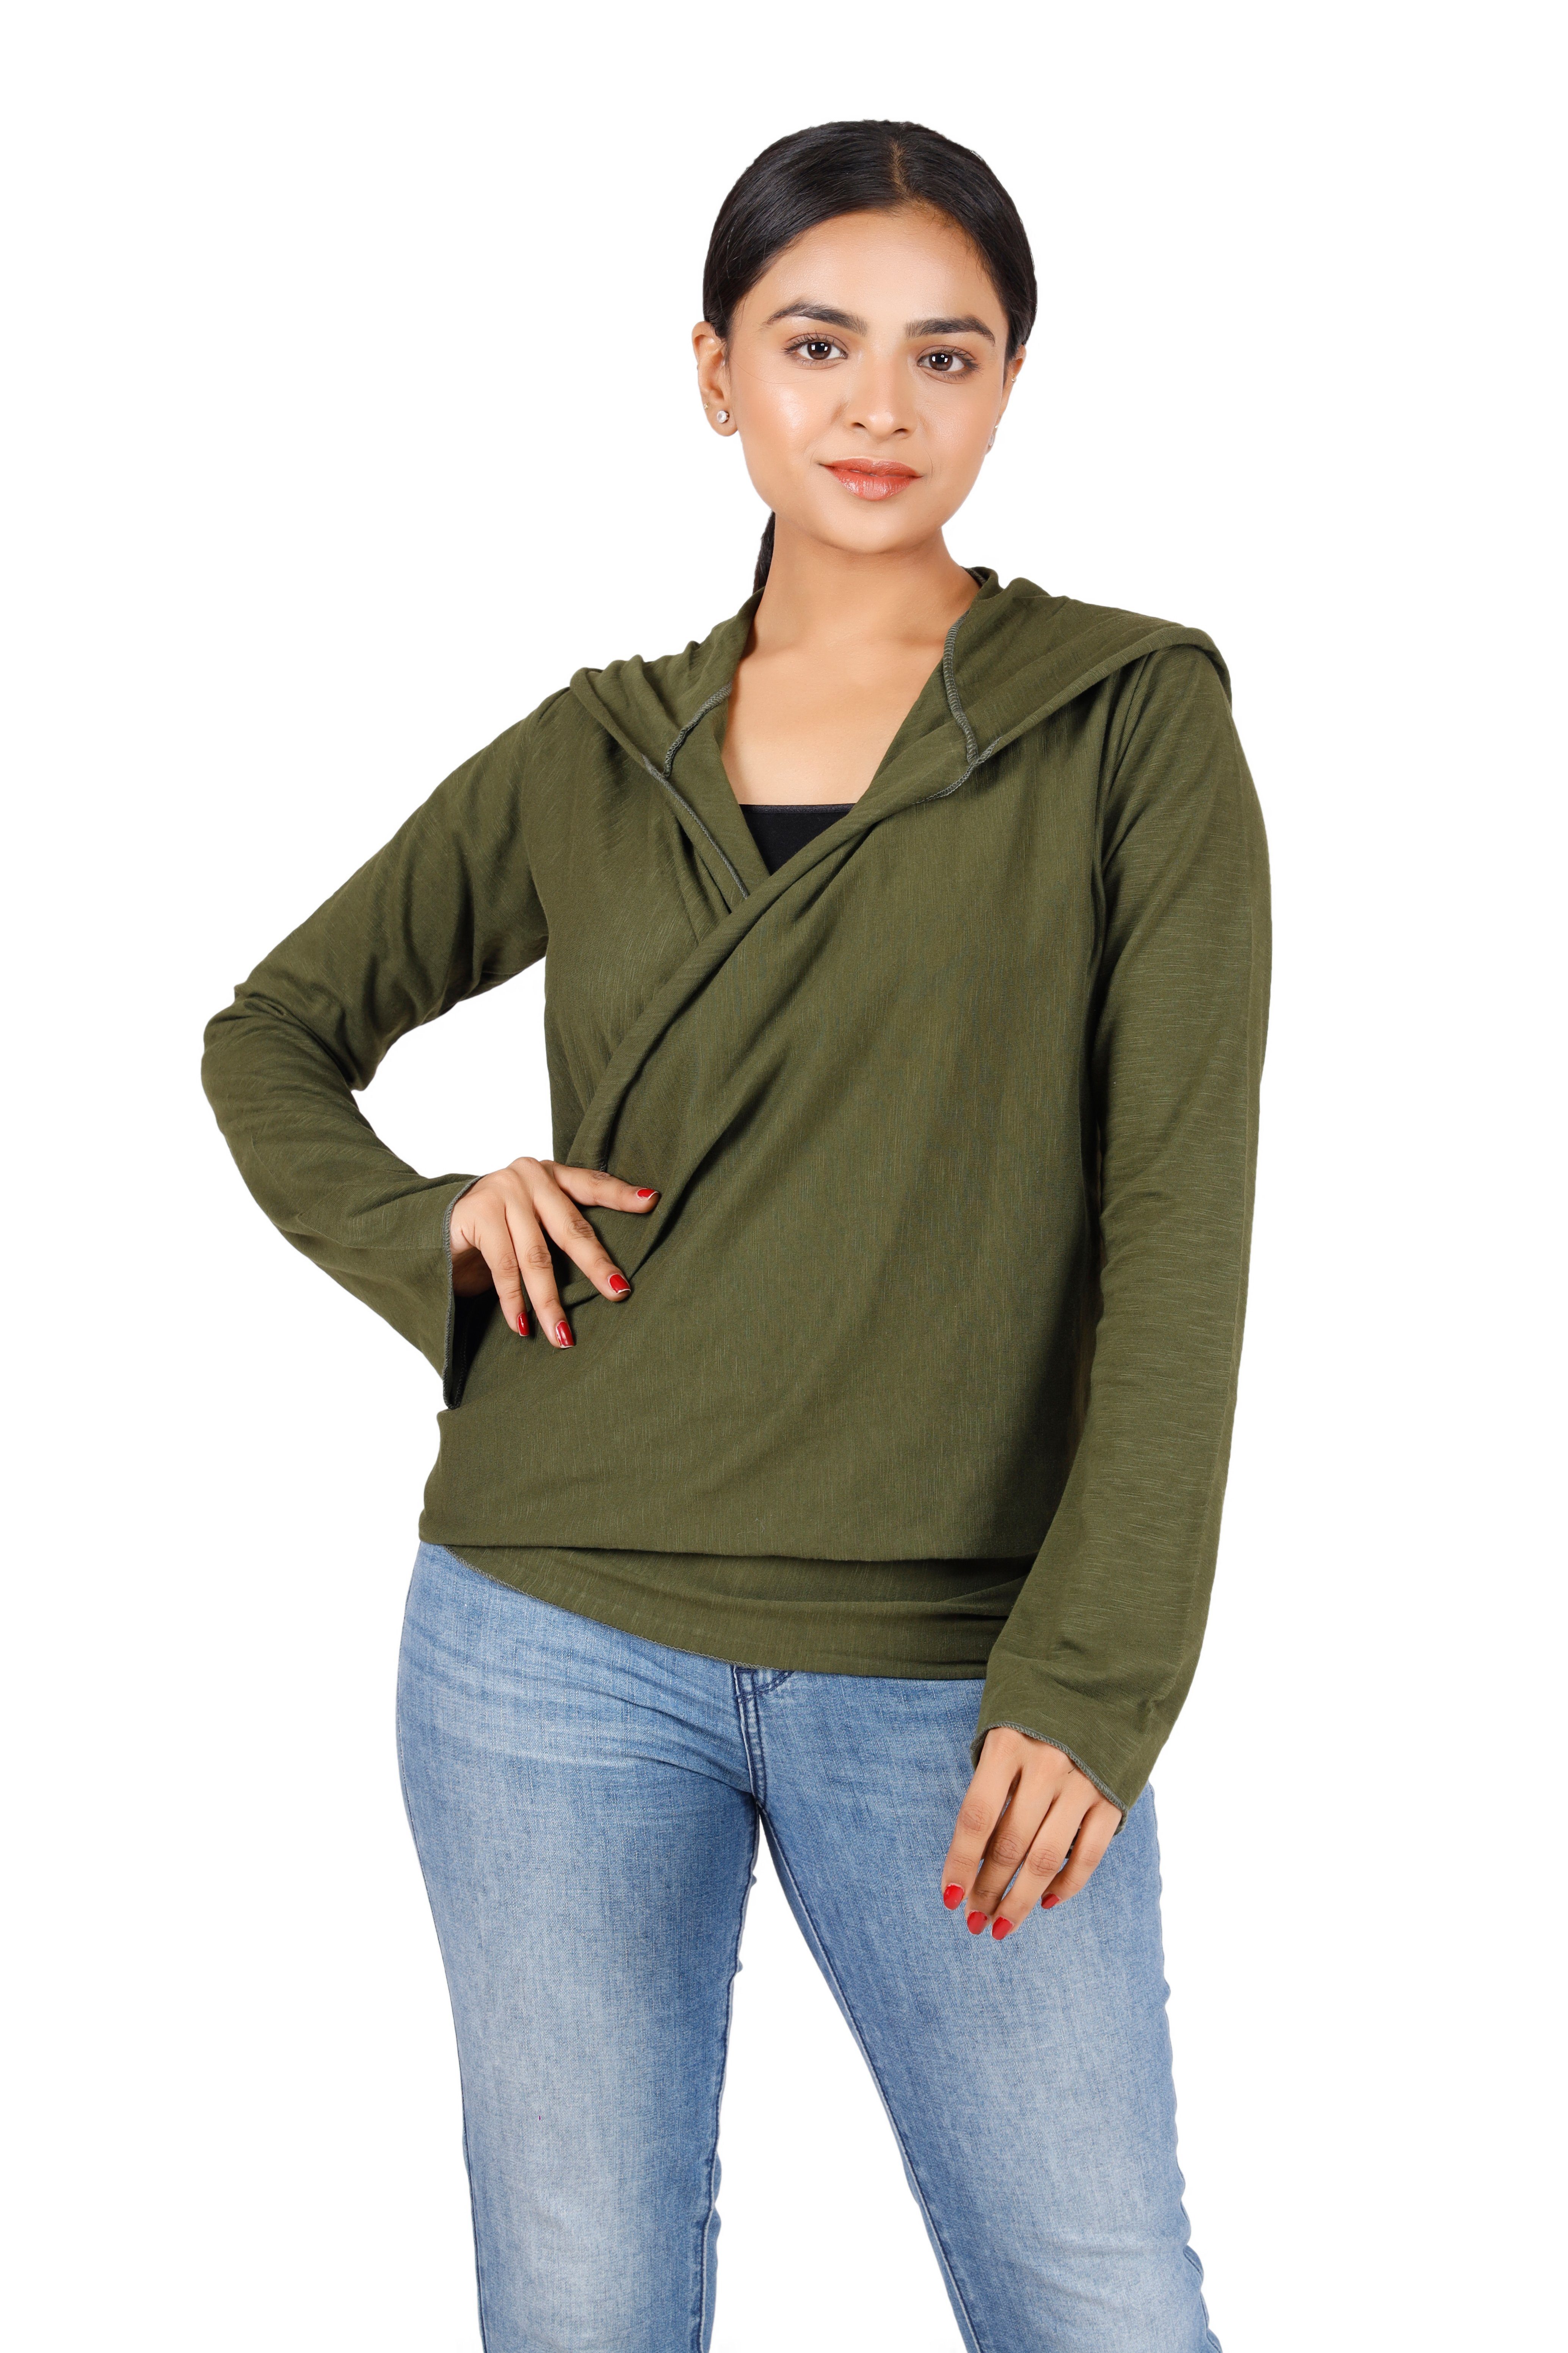 Wickelshirt, alternative Yogashirt, Bekleidung olivgrün mit.. Guru-Shop Longsleeve Langarmshirt